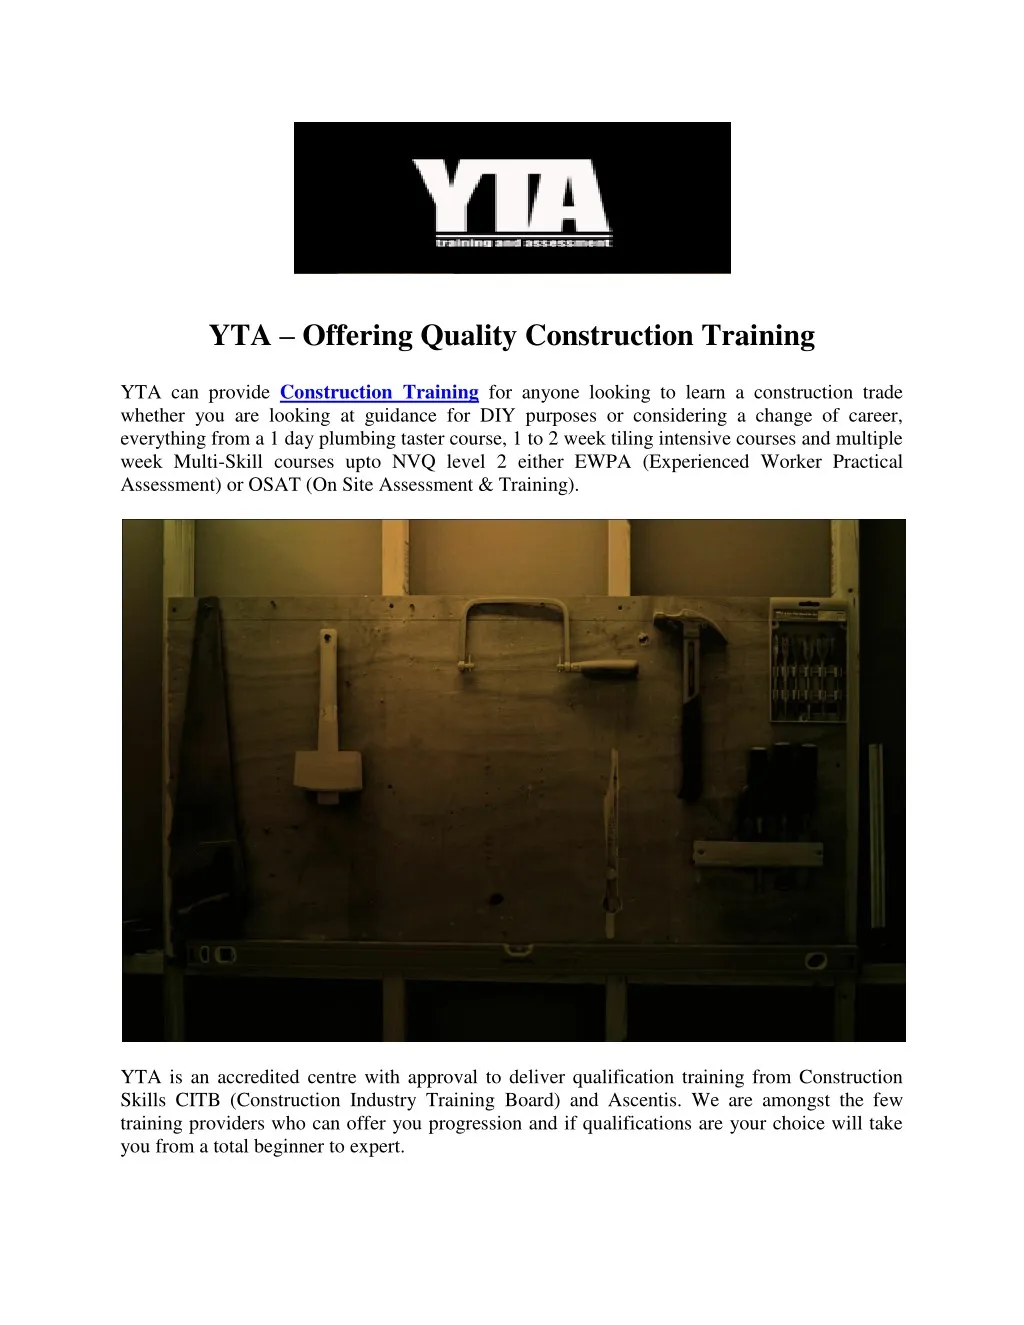 yta offering quality construction training